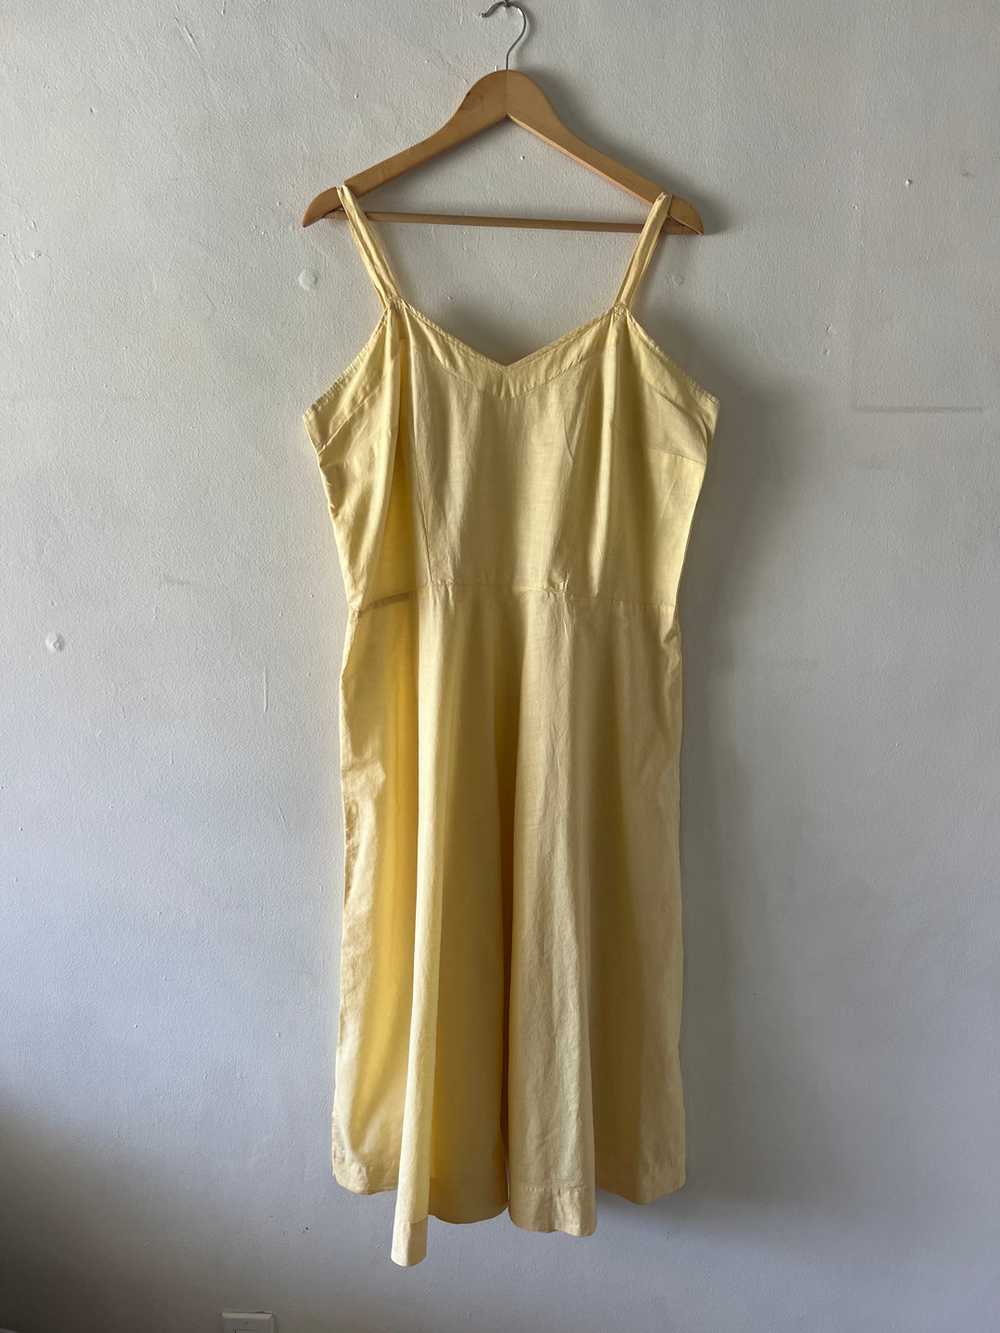 Vintage Cotton Yellow Dress (L) - image 1